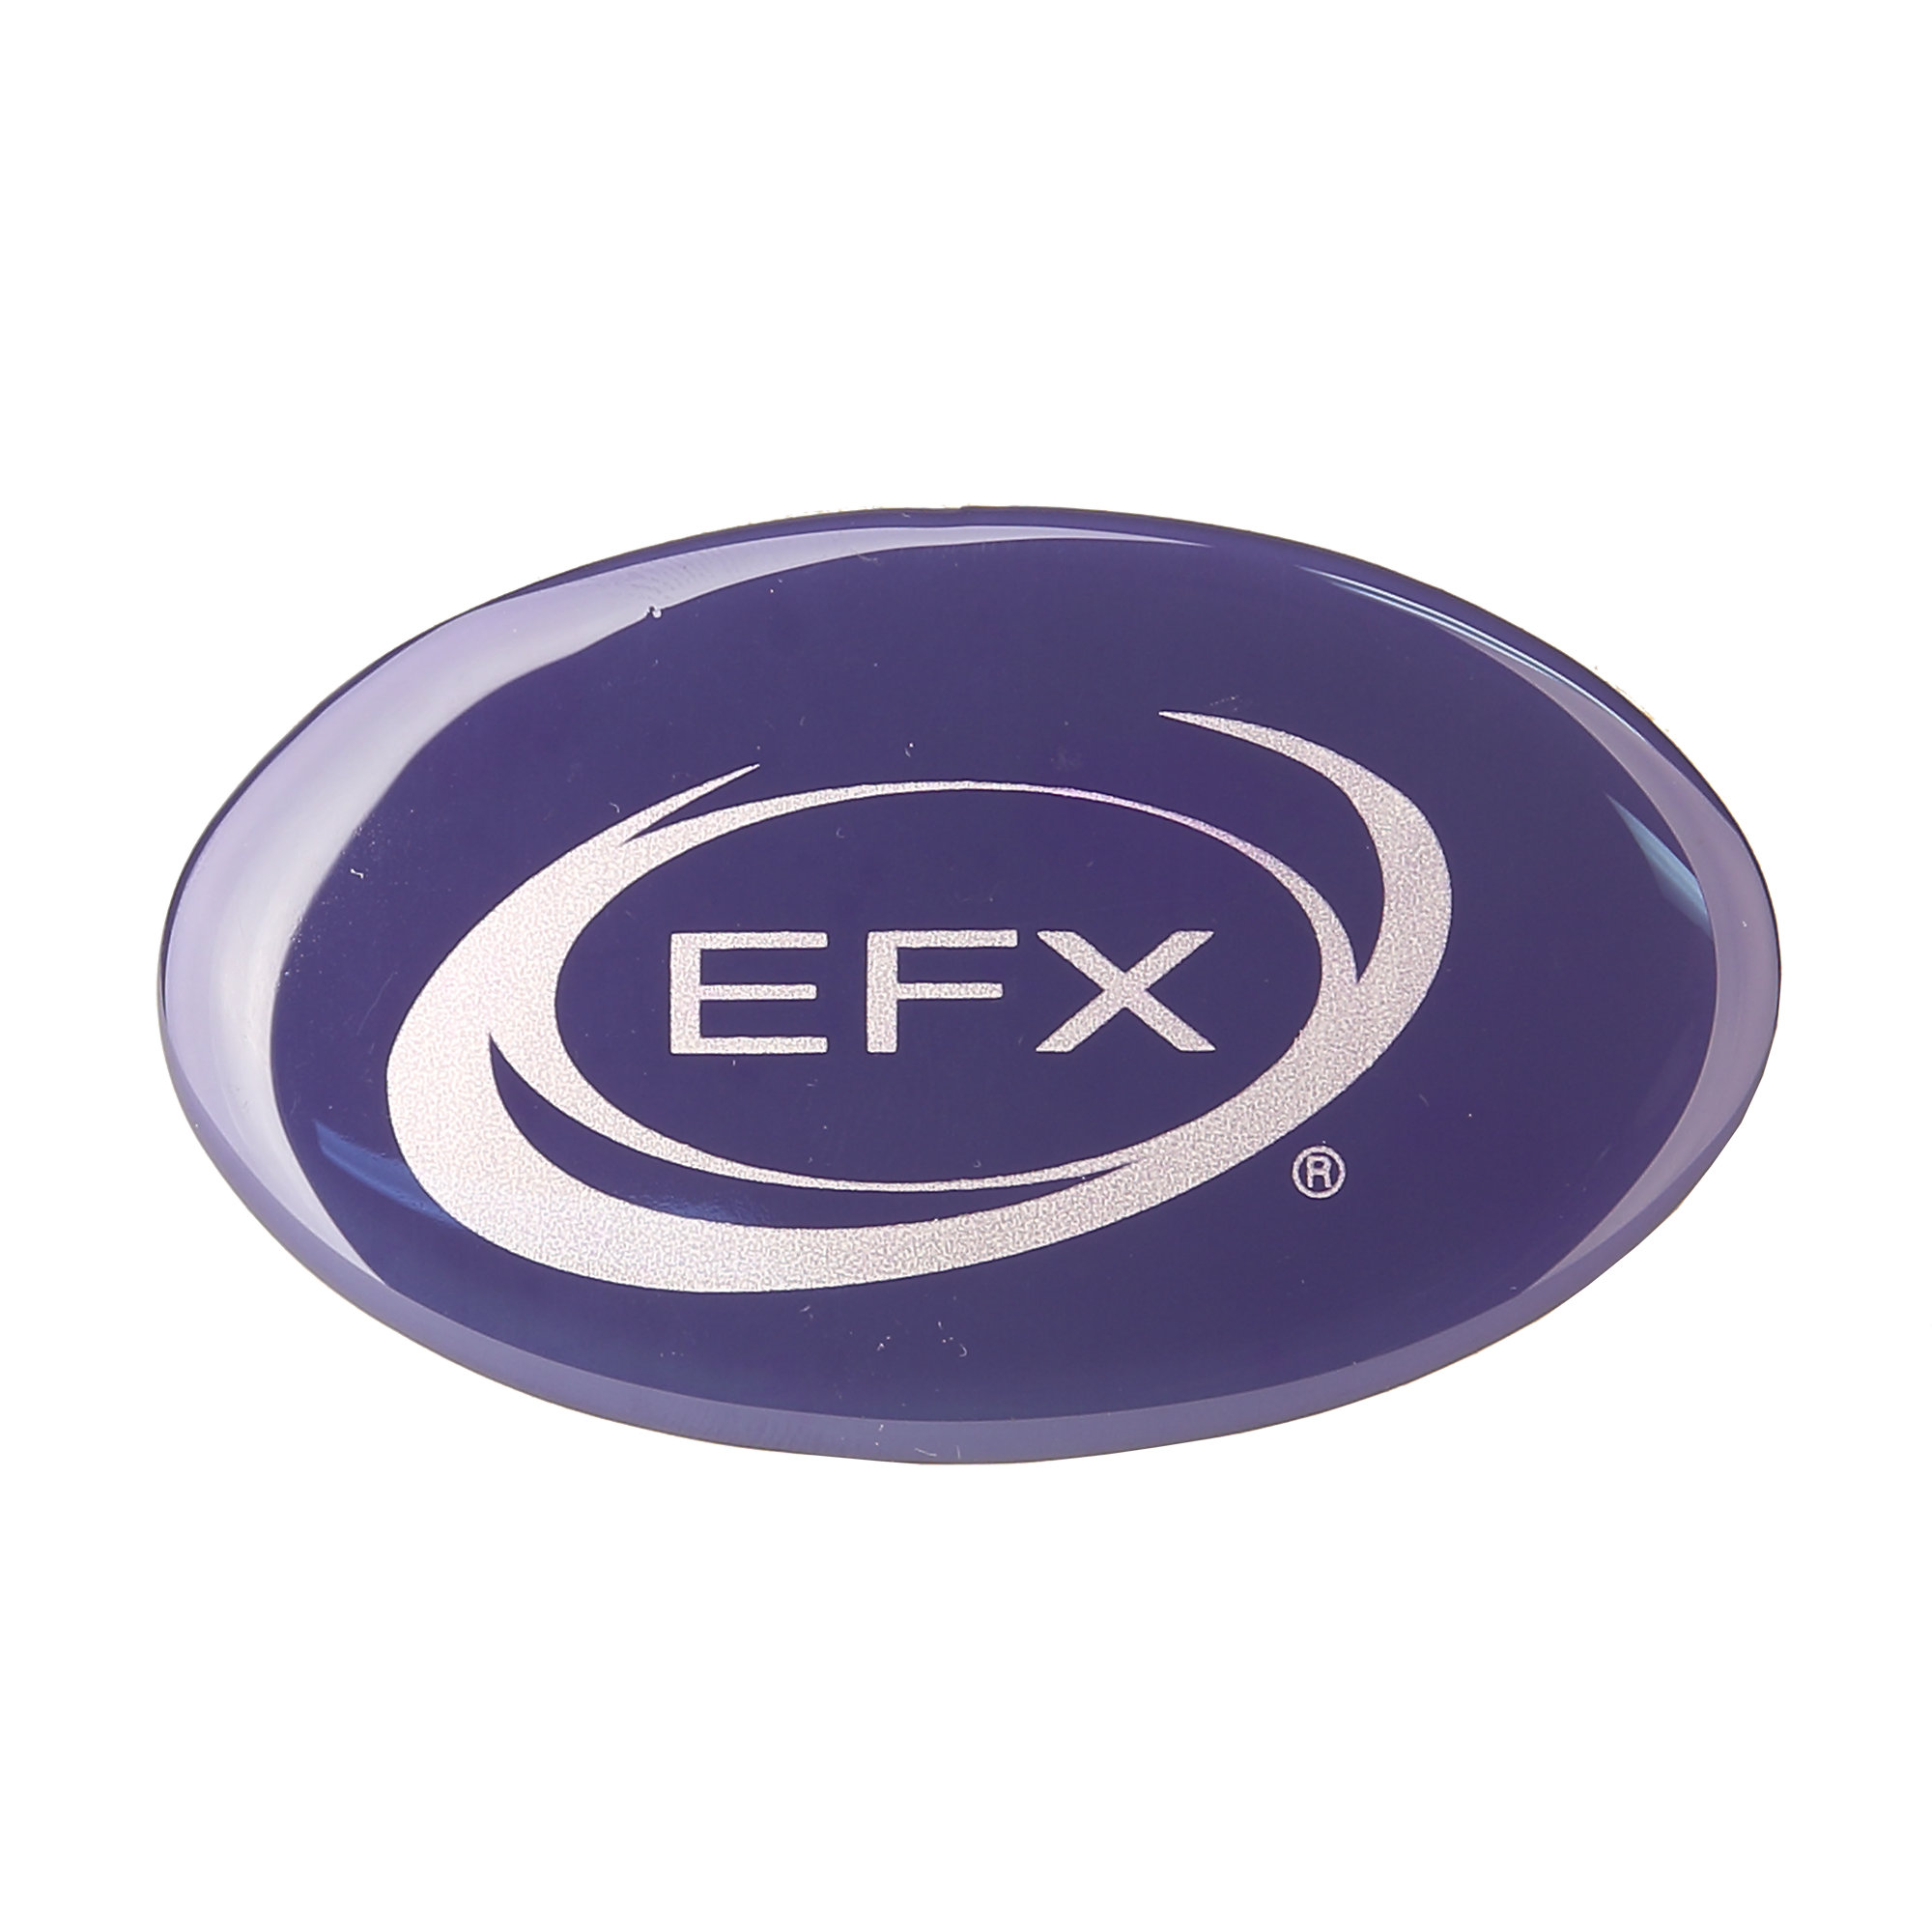 EFX Dome Label for Center Ramp Cover, Dark Blue, Precor